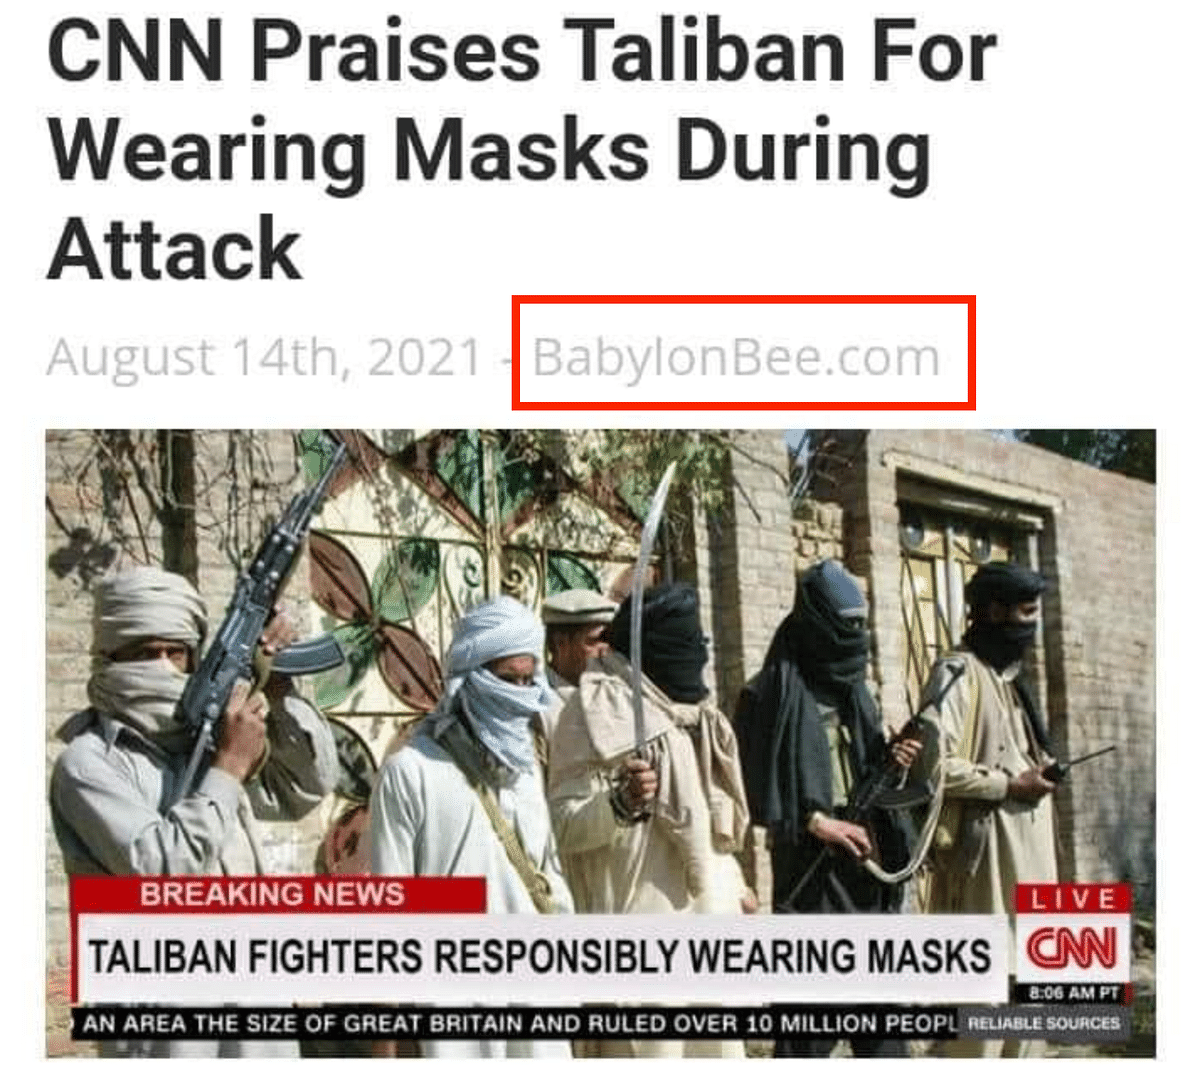 <div class="paragraphs"><p>Byline shows 'BabylonBee' and not CNN.&nbsp;</p></div>